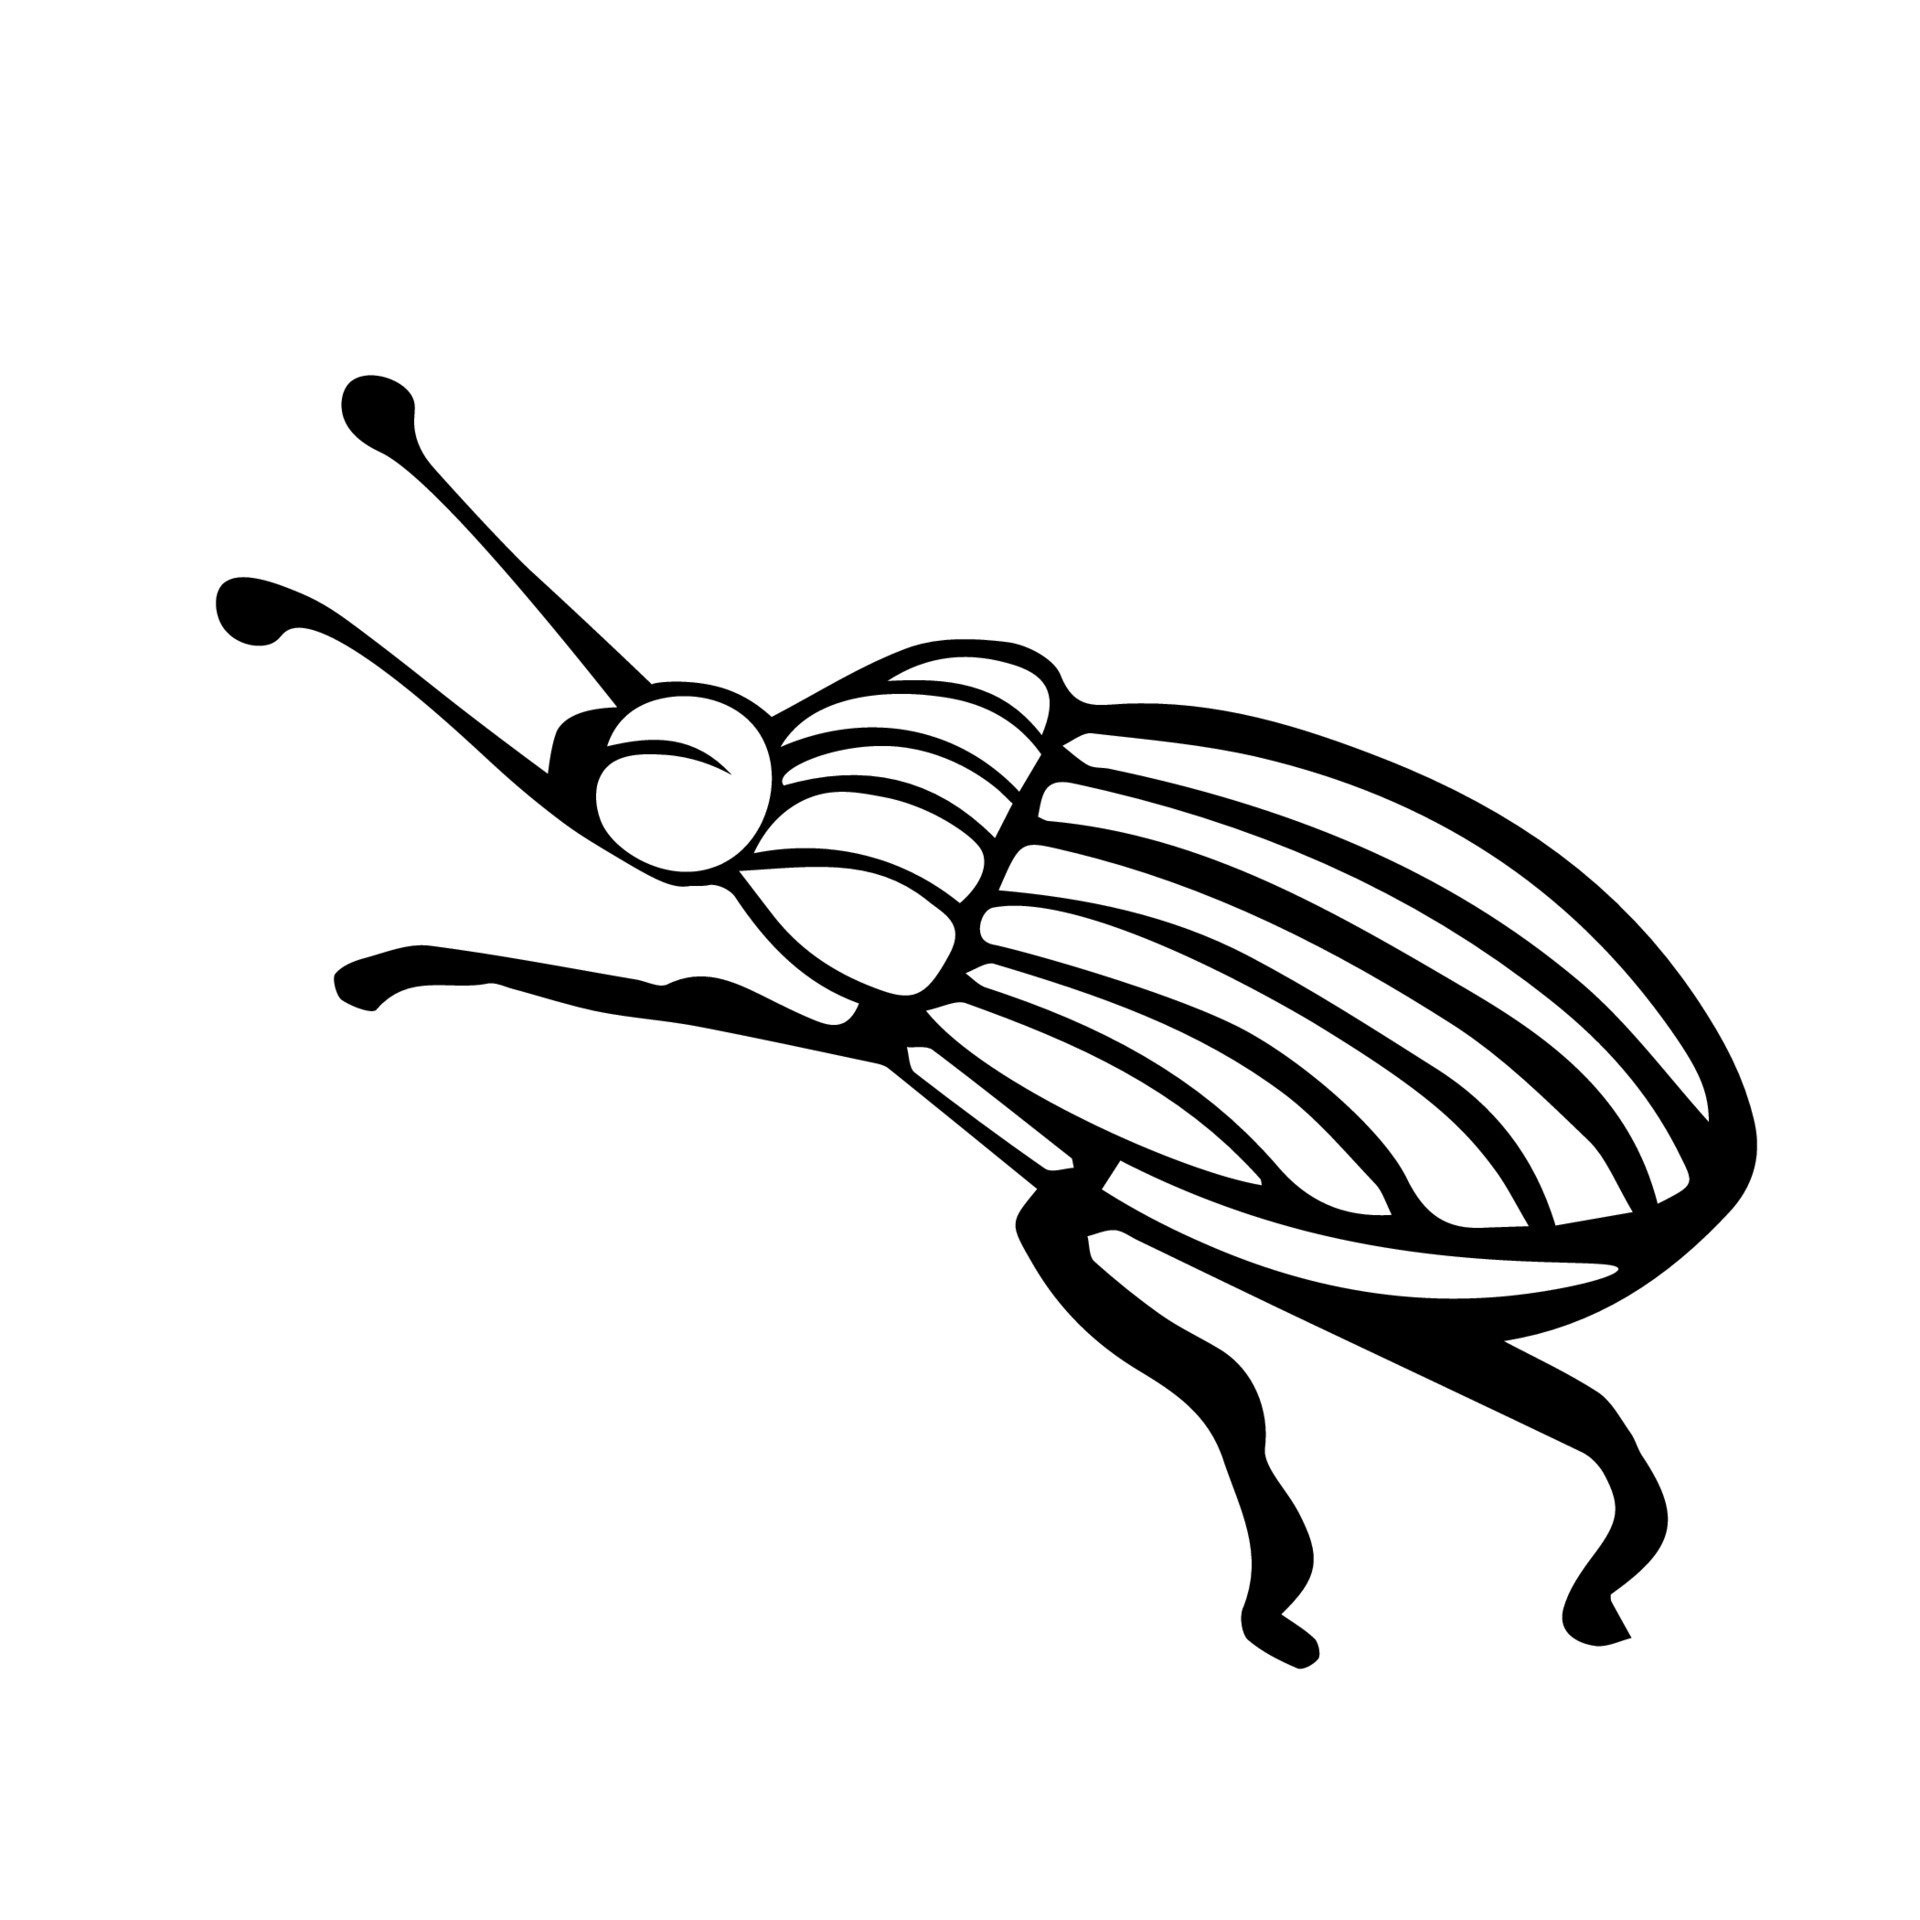 90 Free Drawing Bug  Bug Images  Pixabay